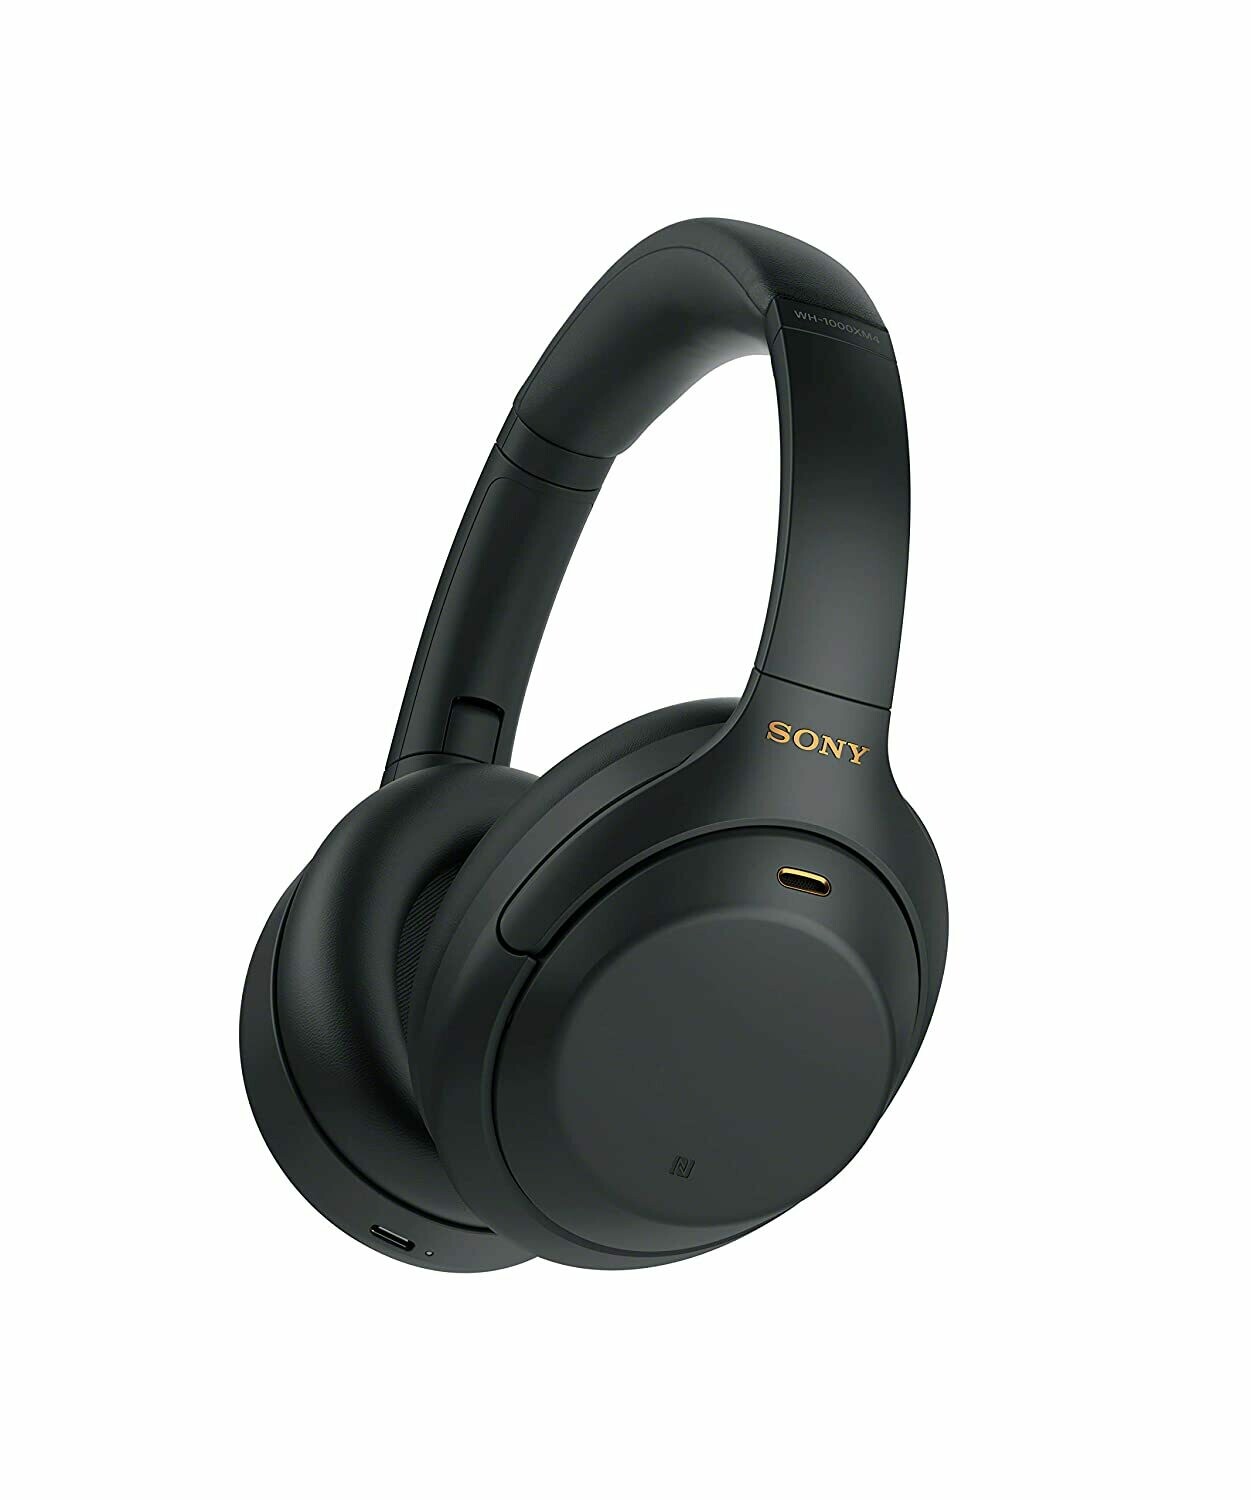 SONY WH-1000XM4 Wireless Noise-Canceling Headphones